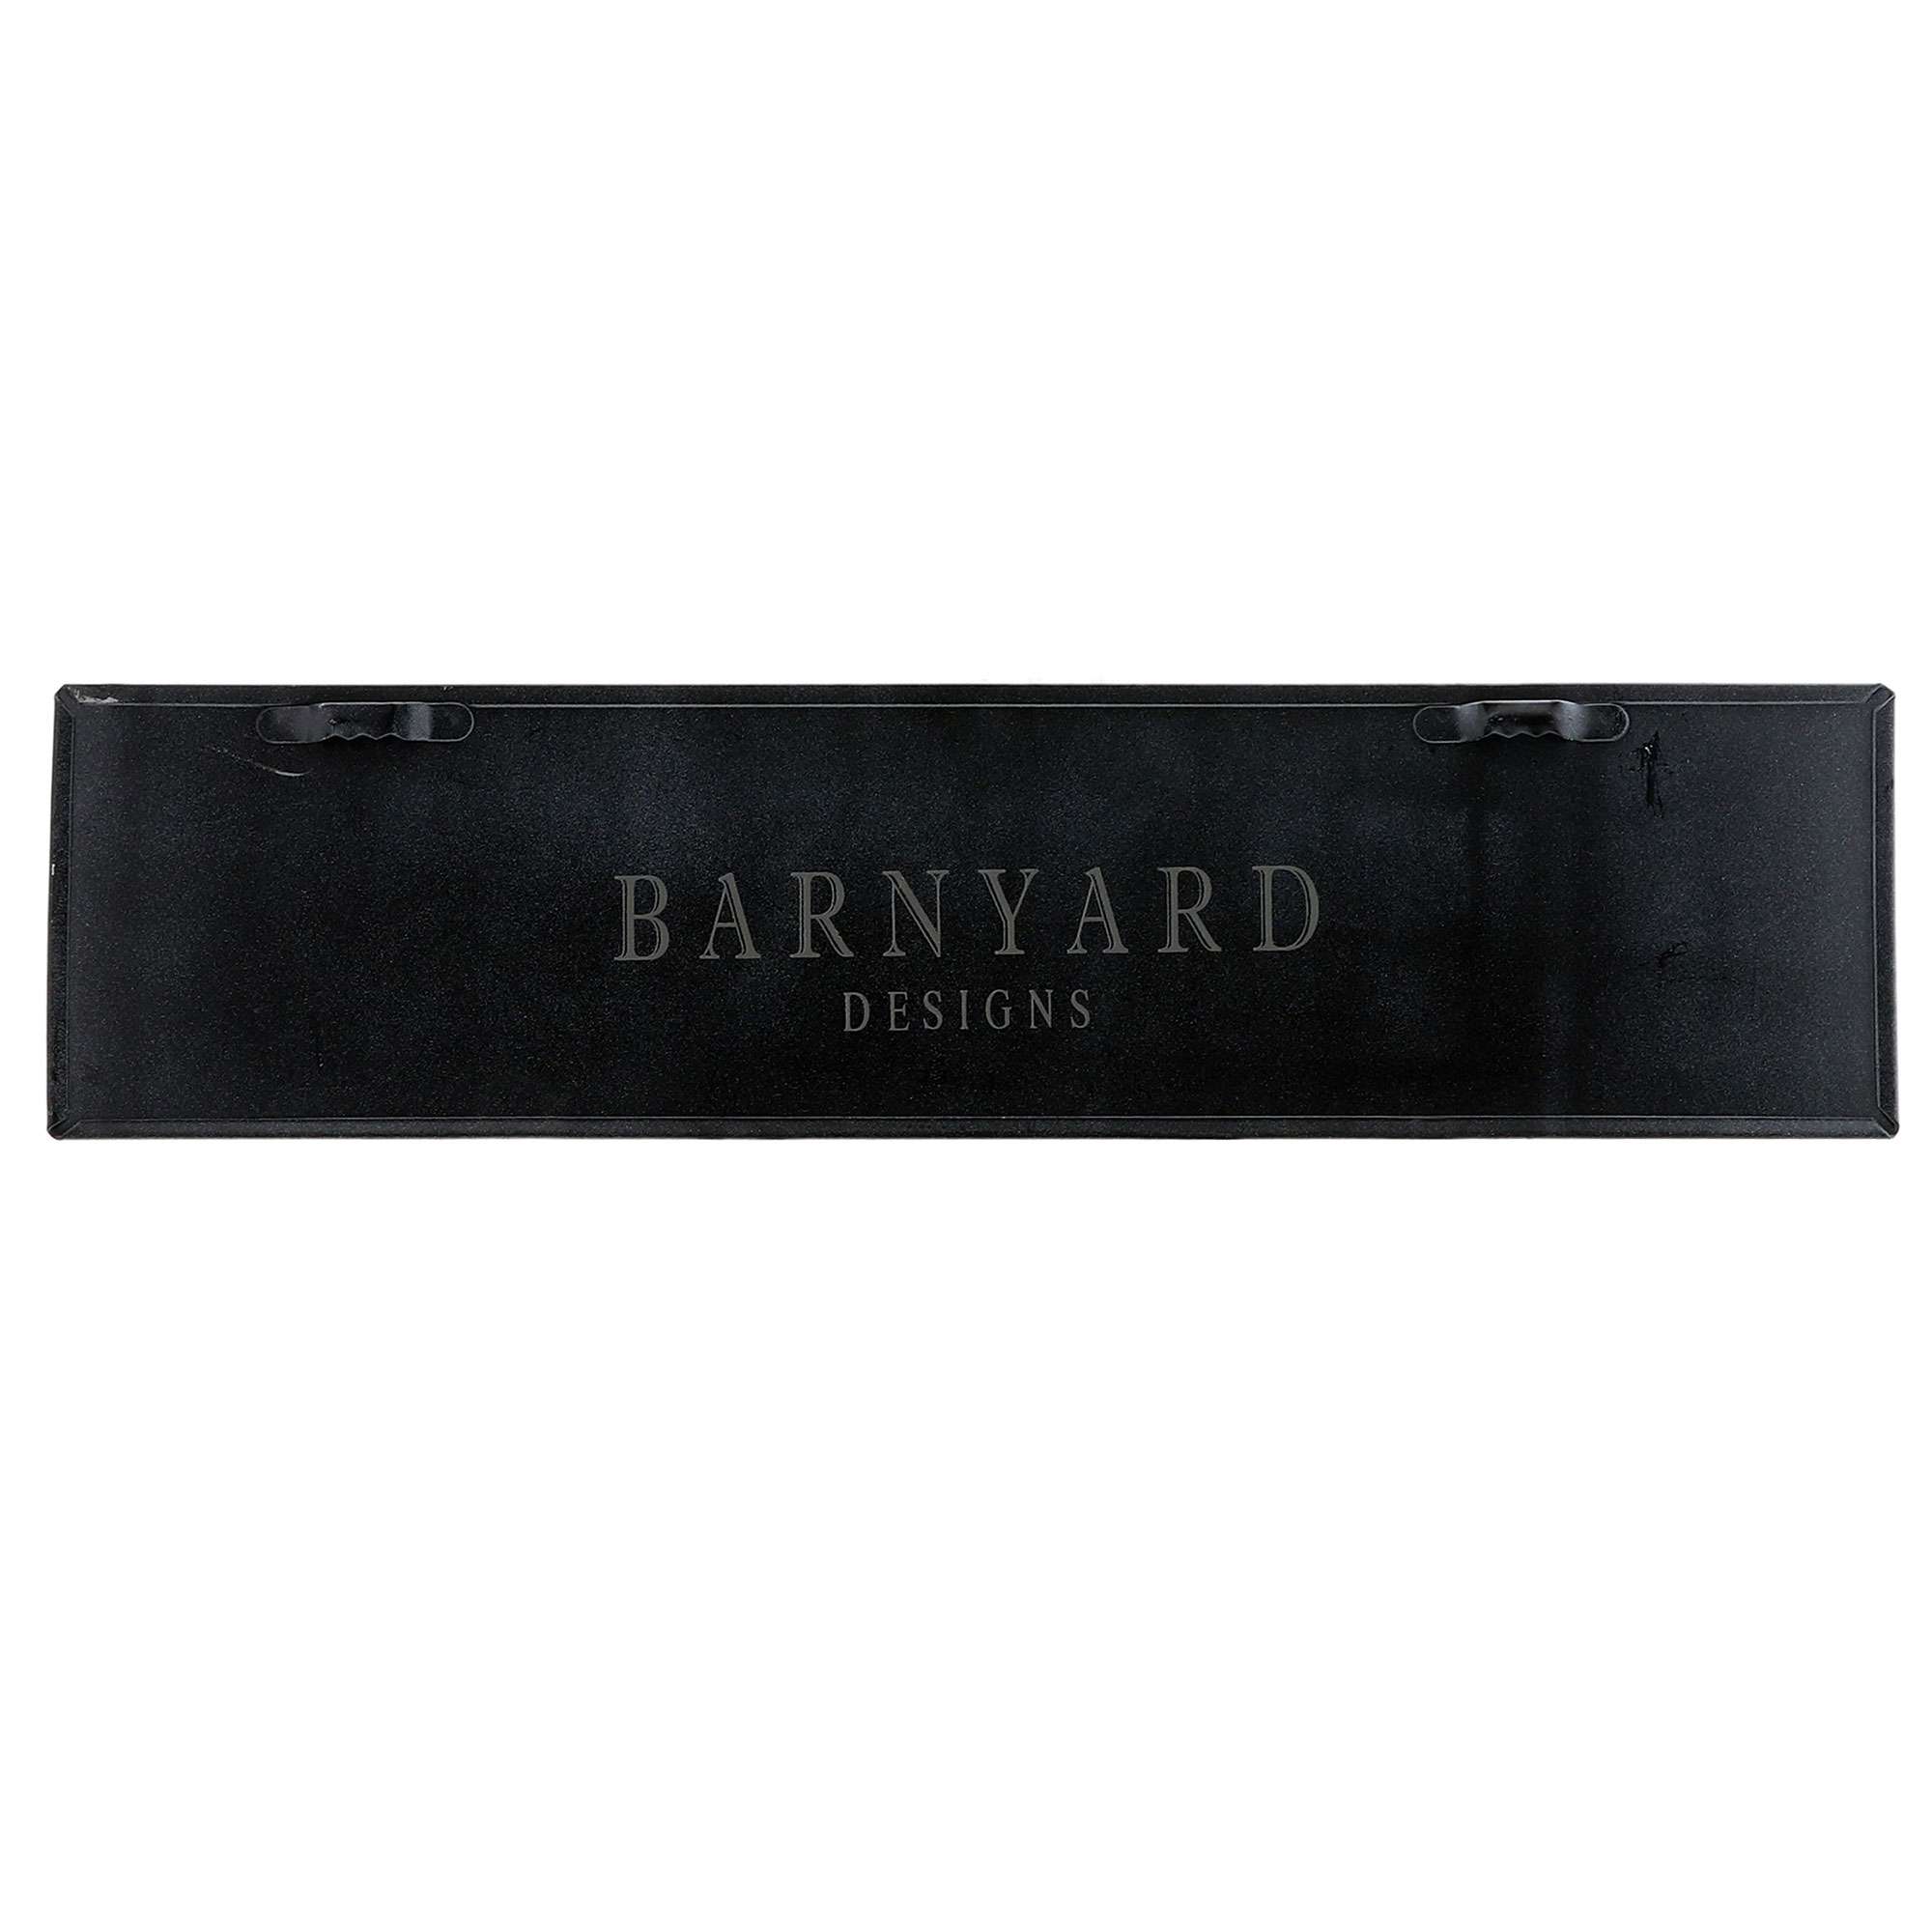 Barnyard Designs Farmhouse Retro Vintage Metal Tin Bar Sign, Decorative Wall Art Signage, Primitive Farmhouse Country Kitchen Home Décor, 15.75" x 4" - image 5 of 6